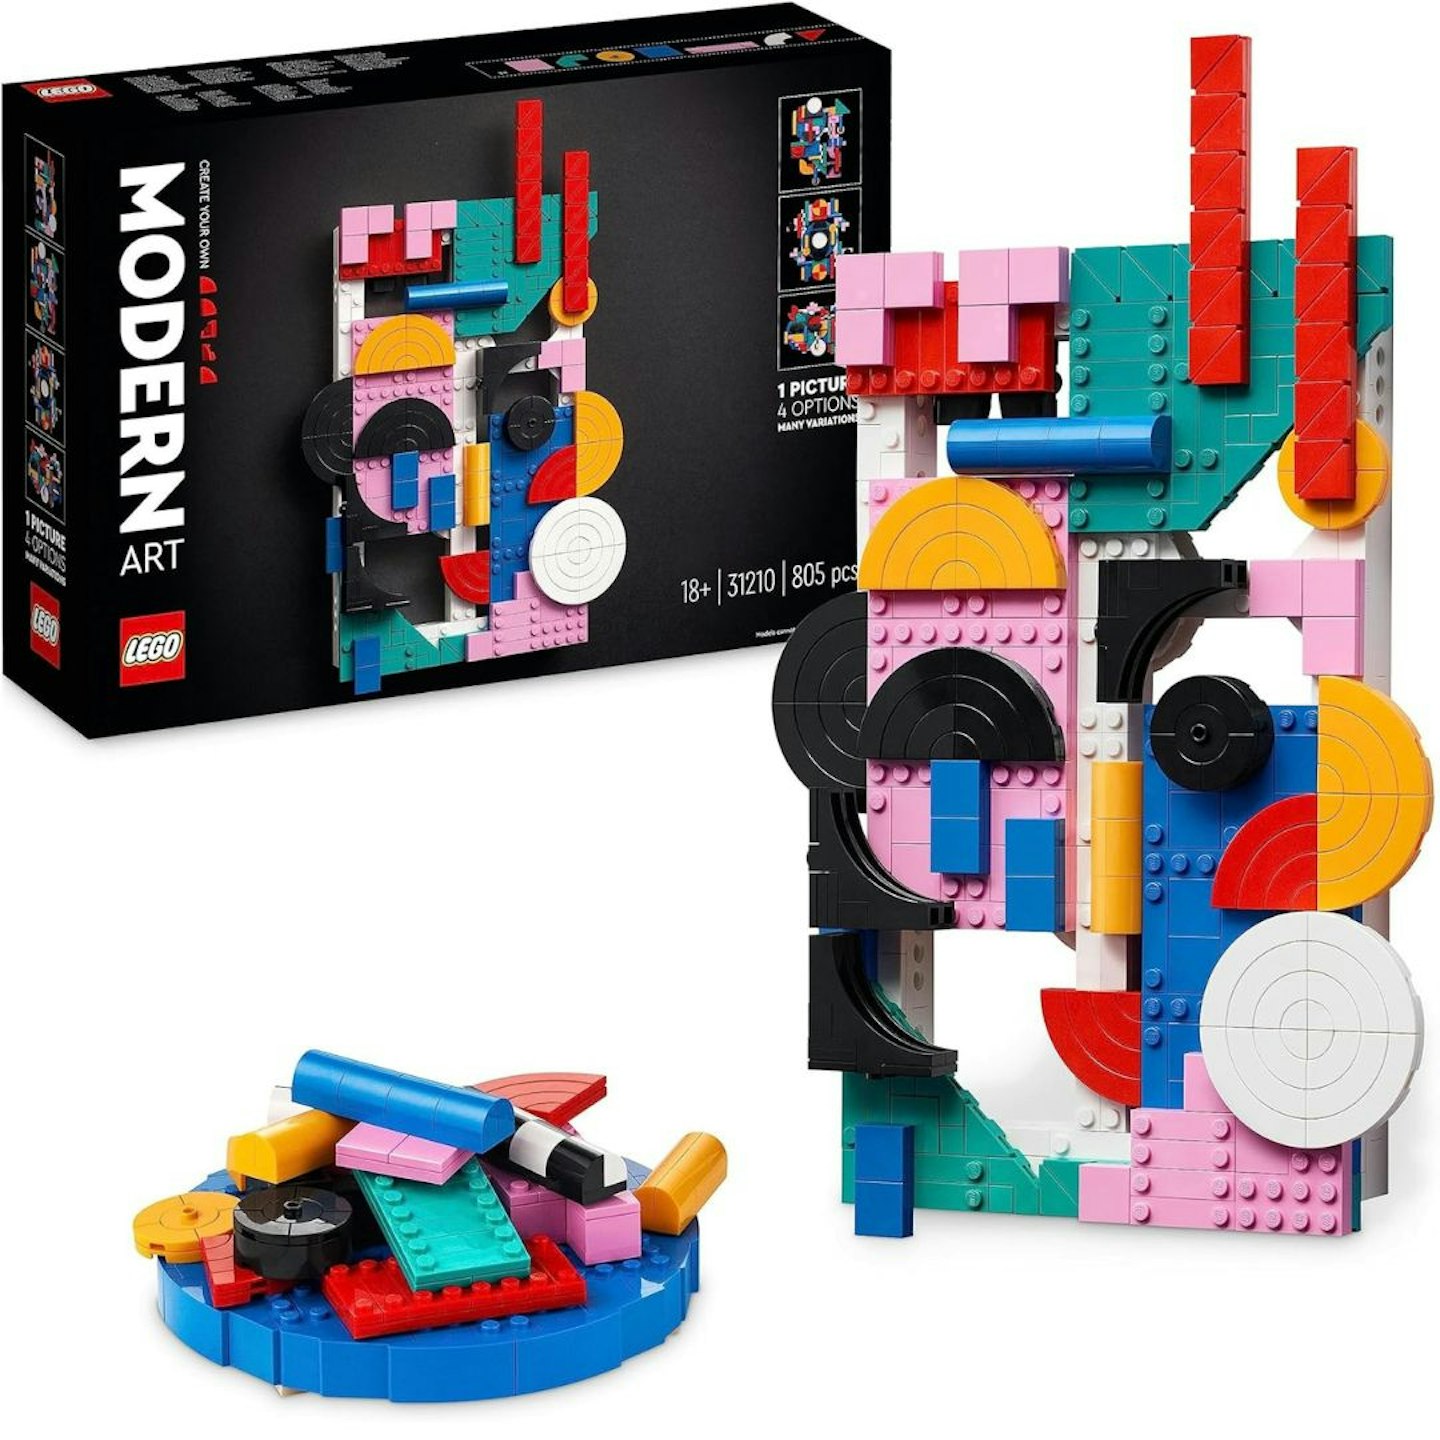 The best LEGO sets for adults: LEGO 31210 ART Modern Art Set